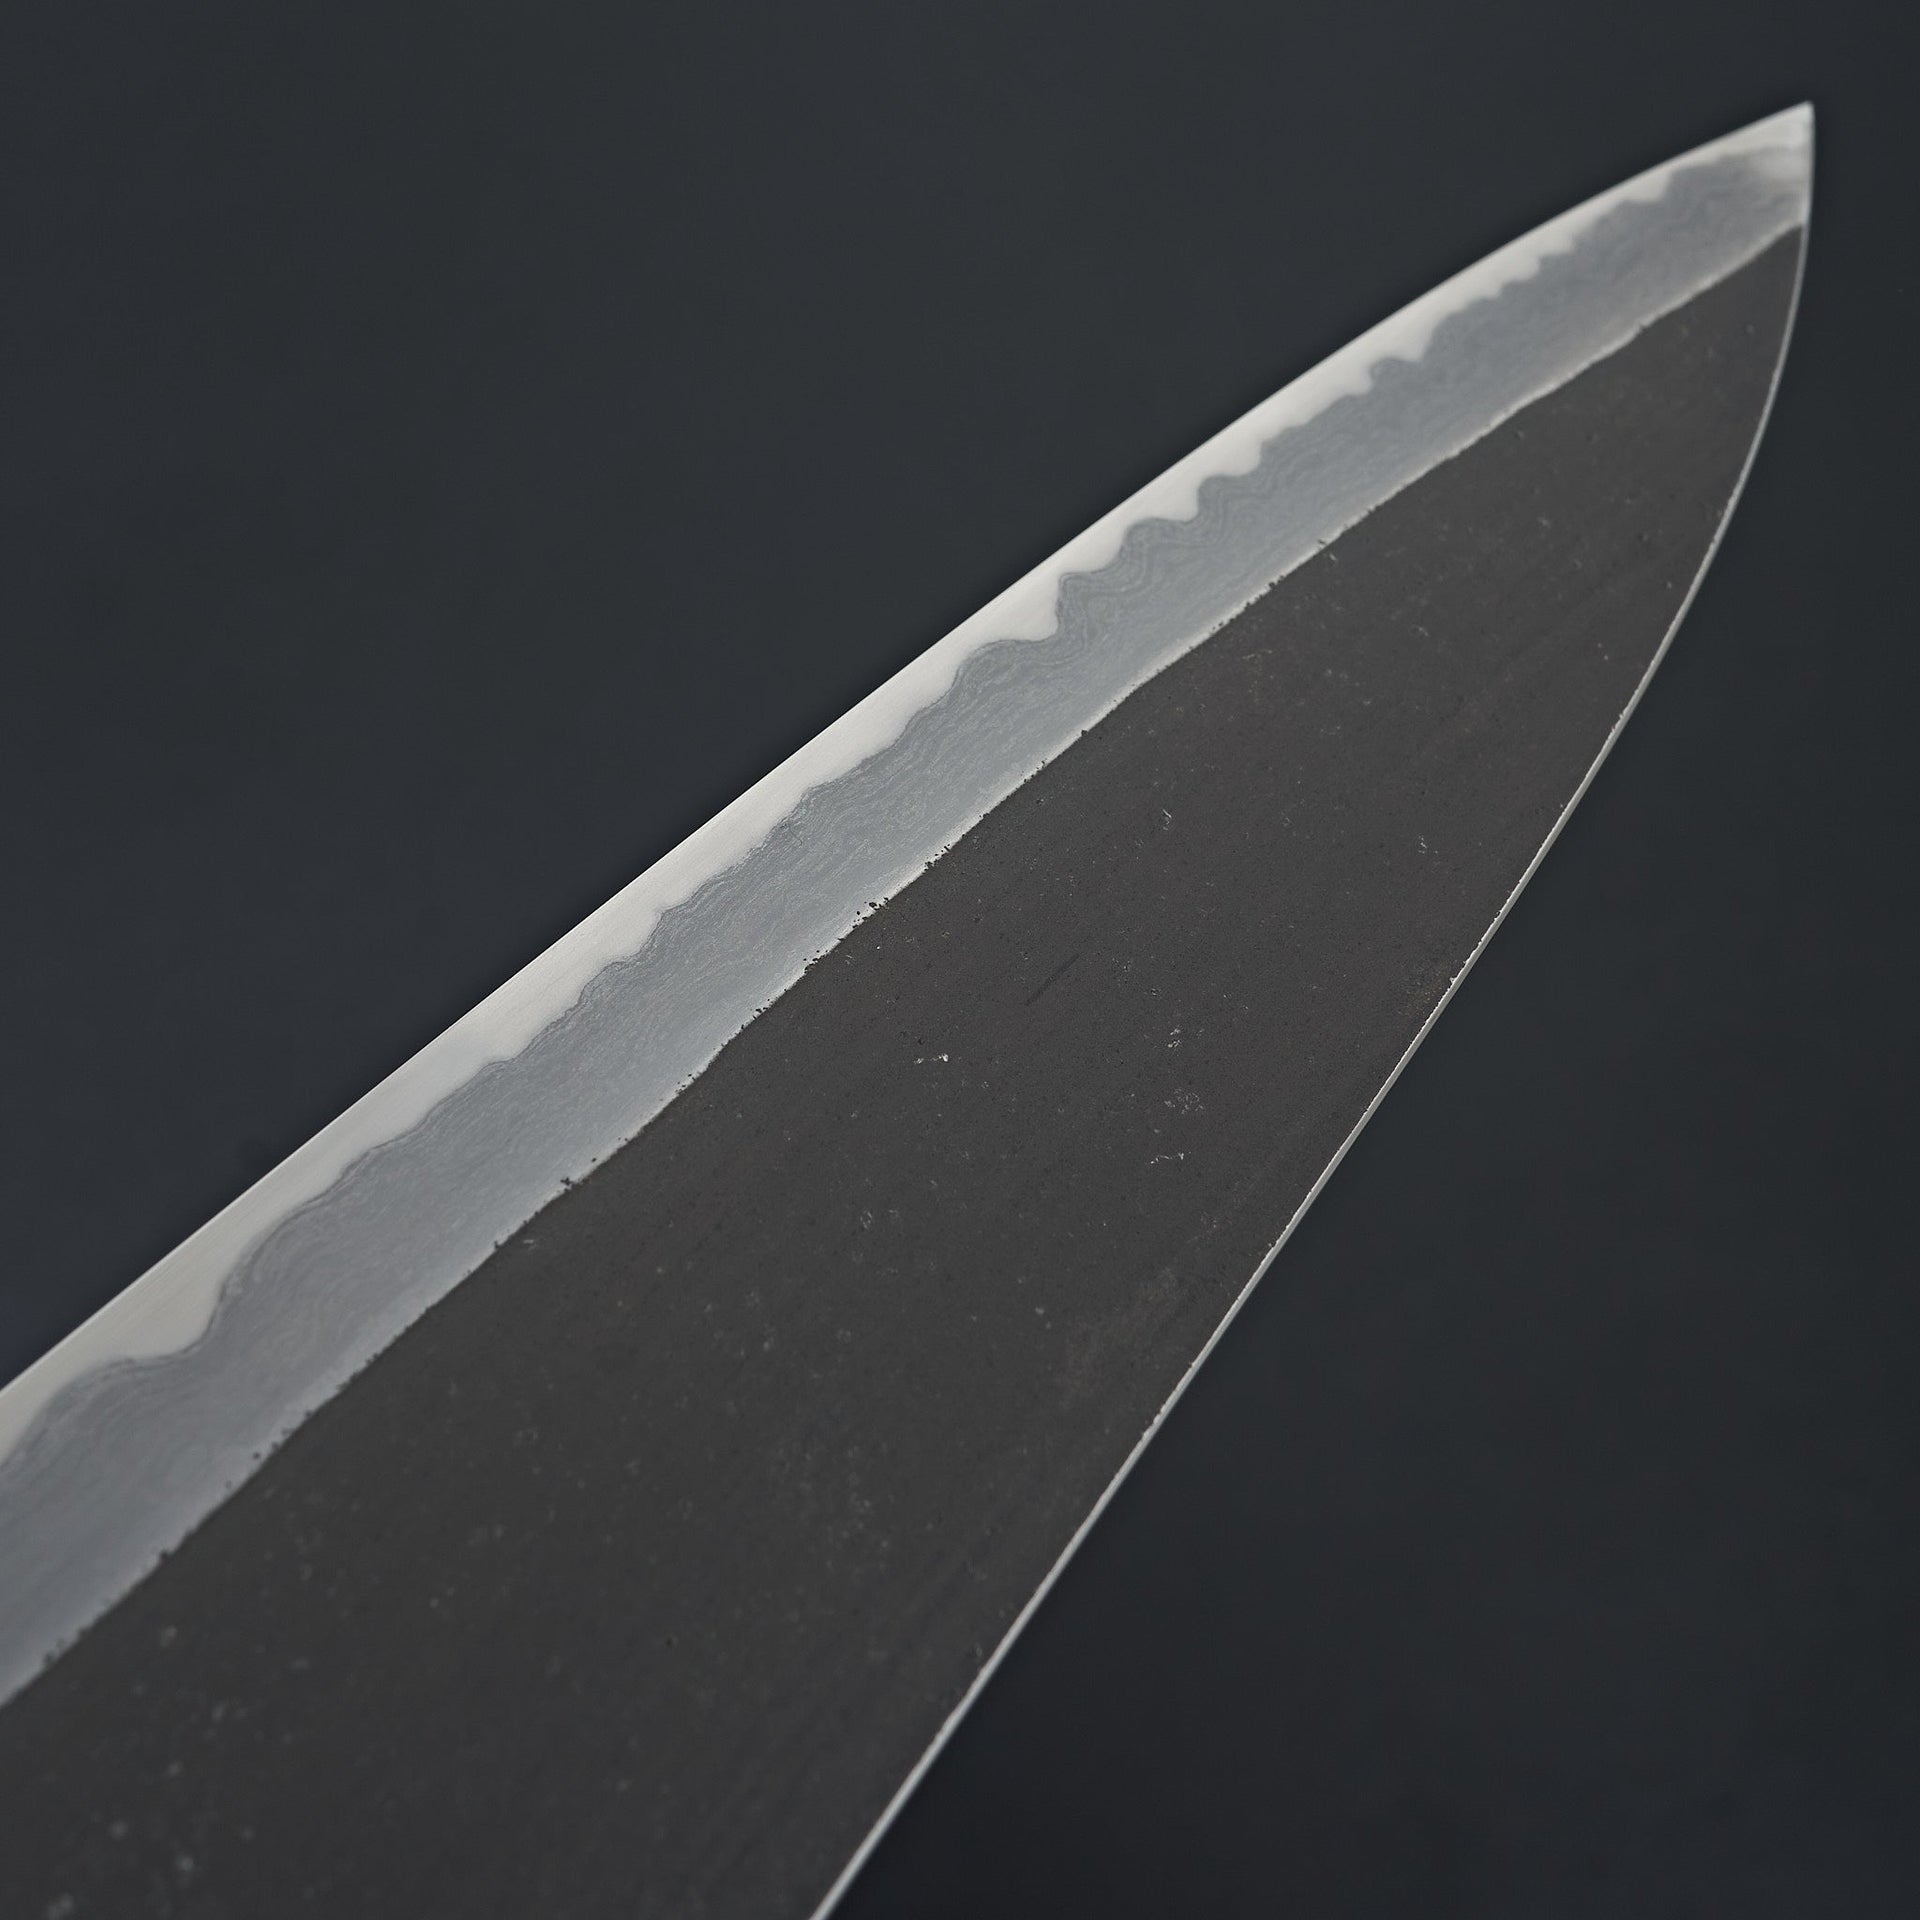 Yanick Puig African Rosewood Gyuto 245mm-Knife-Yanick Puig-Carbon Knife Co